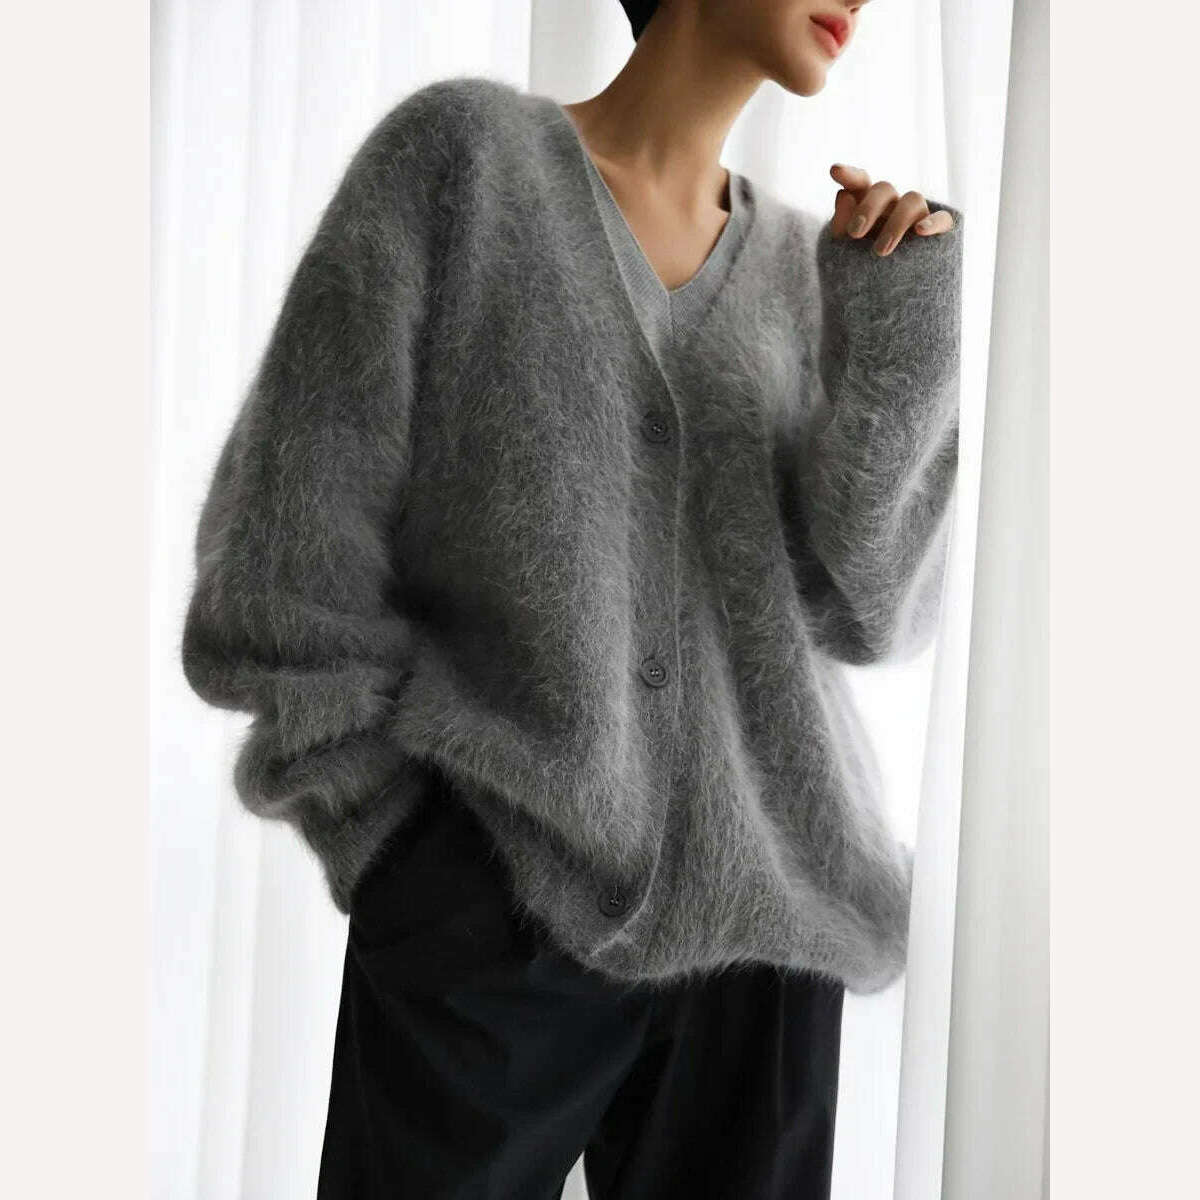 KIMLUD, Bornladies Women Imitation Mink Cardigan Soft V-neck Thiick Knitted Jacket Winter Button Vintage Cardigan Sweater for Women, Dark Grey / S, KIMLUD Women's Clothes